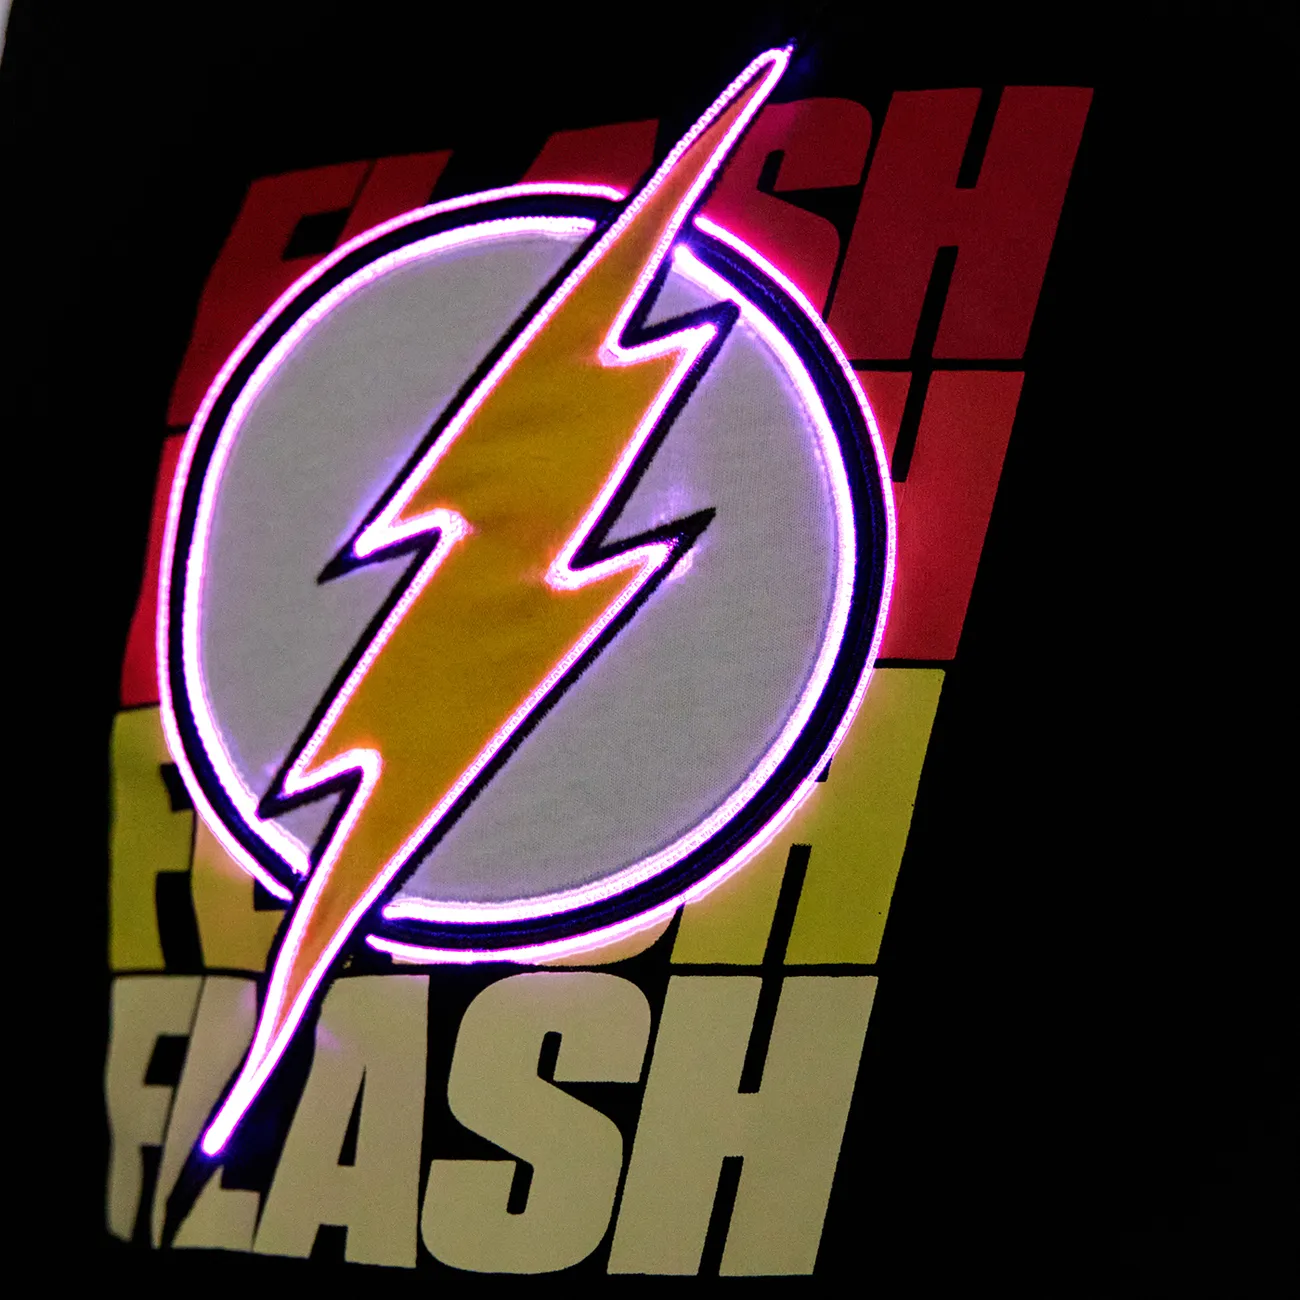 Go-Glow Illuminating Schwarzes Sweatshirt mit Light Up The Flash-Muster schwarz big image 1